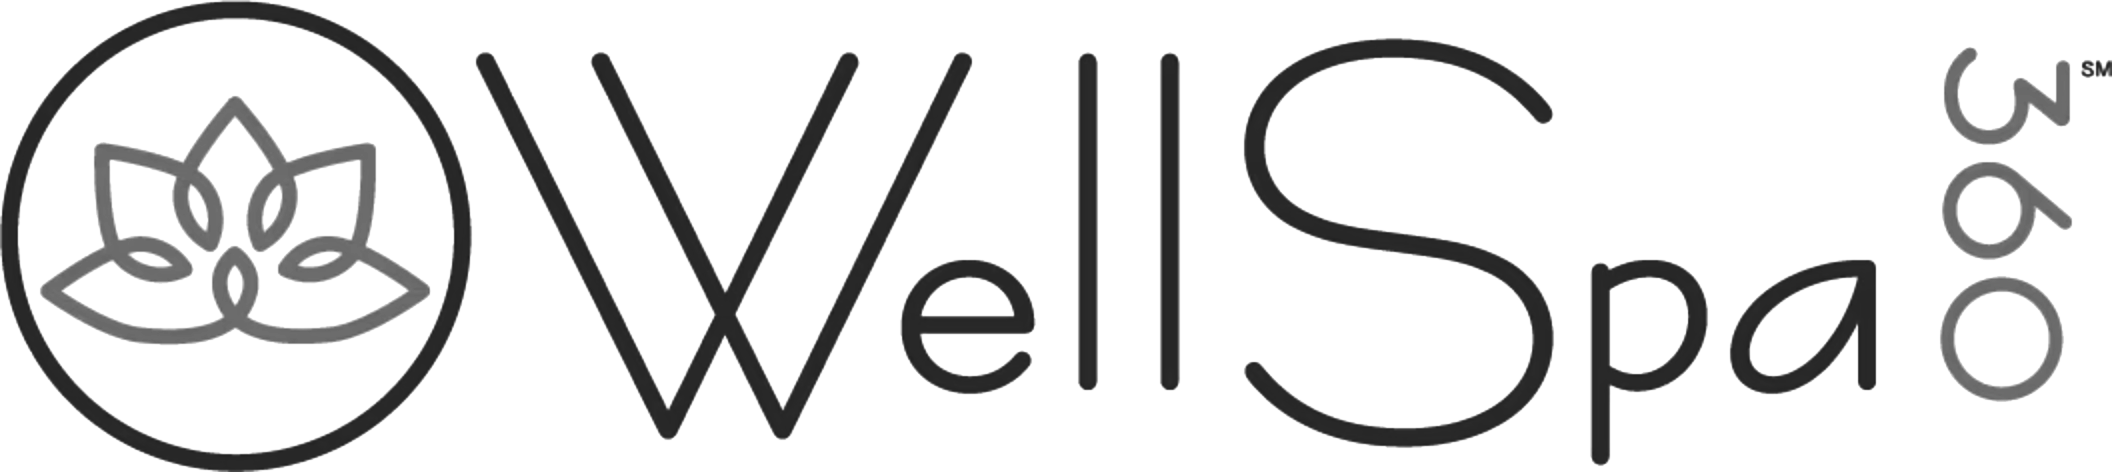 wellspa logo